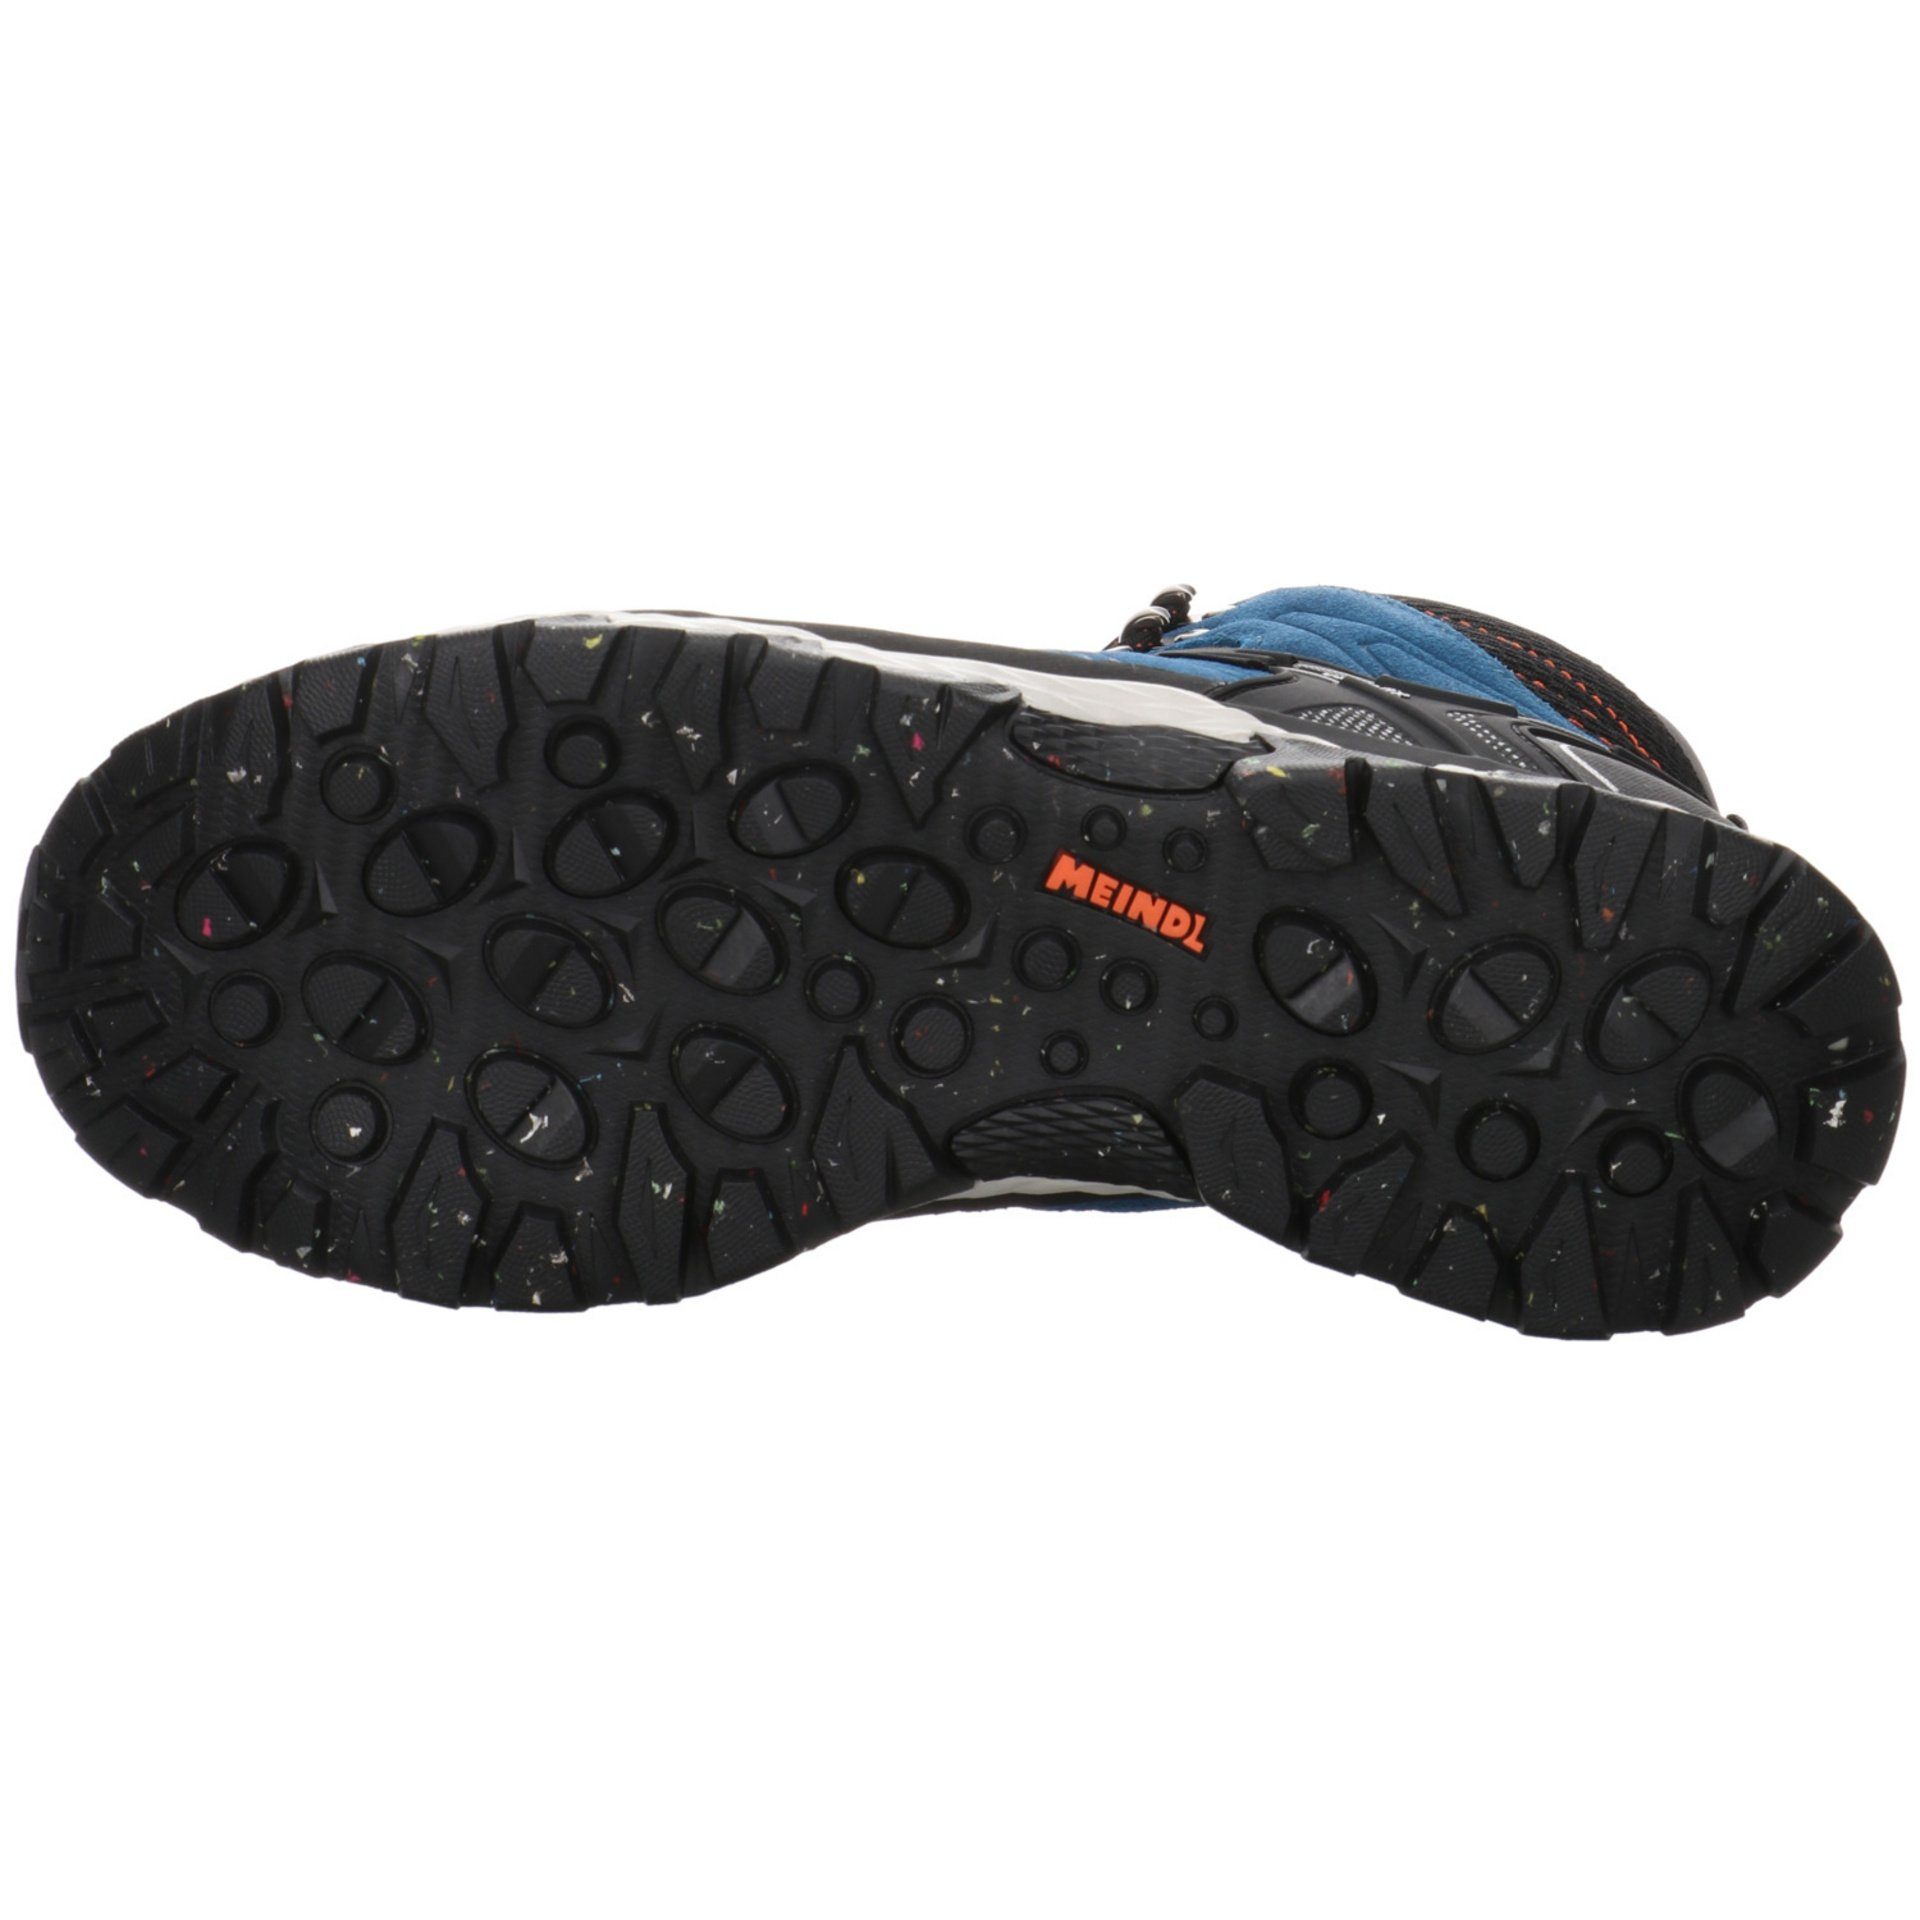 Meindl Herren Outdoor Schuhe blau/orange Outdoorschuh Leder-/Textilkombination Lite Hike Outdoorschuh GTX